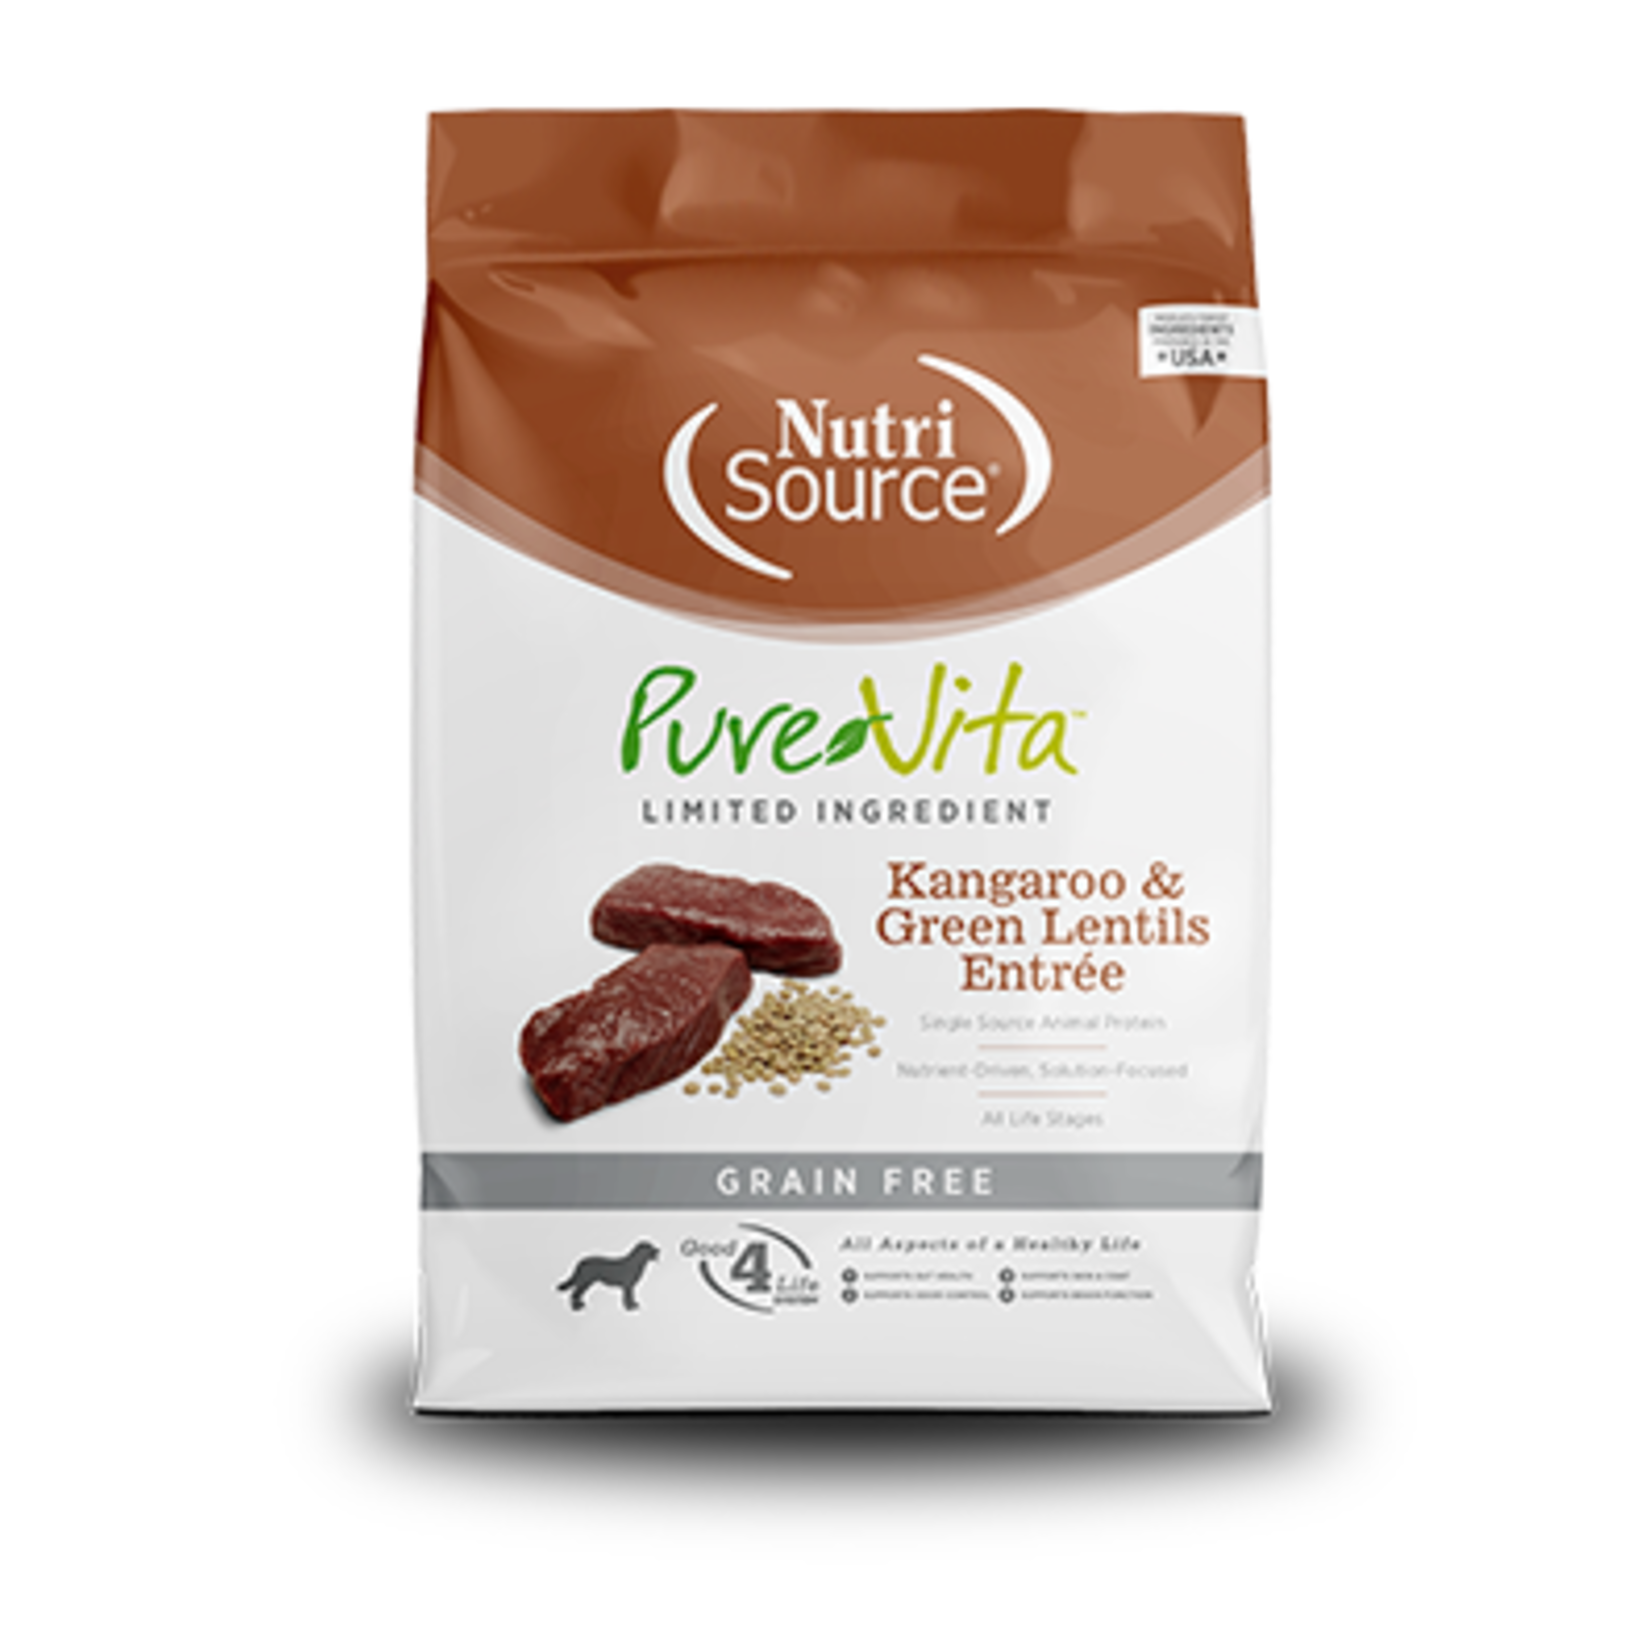 Nutri-Source Kangaroo & Green Lentils - PureVita - G Free - 5 lbs